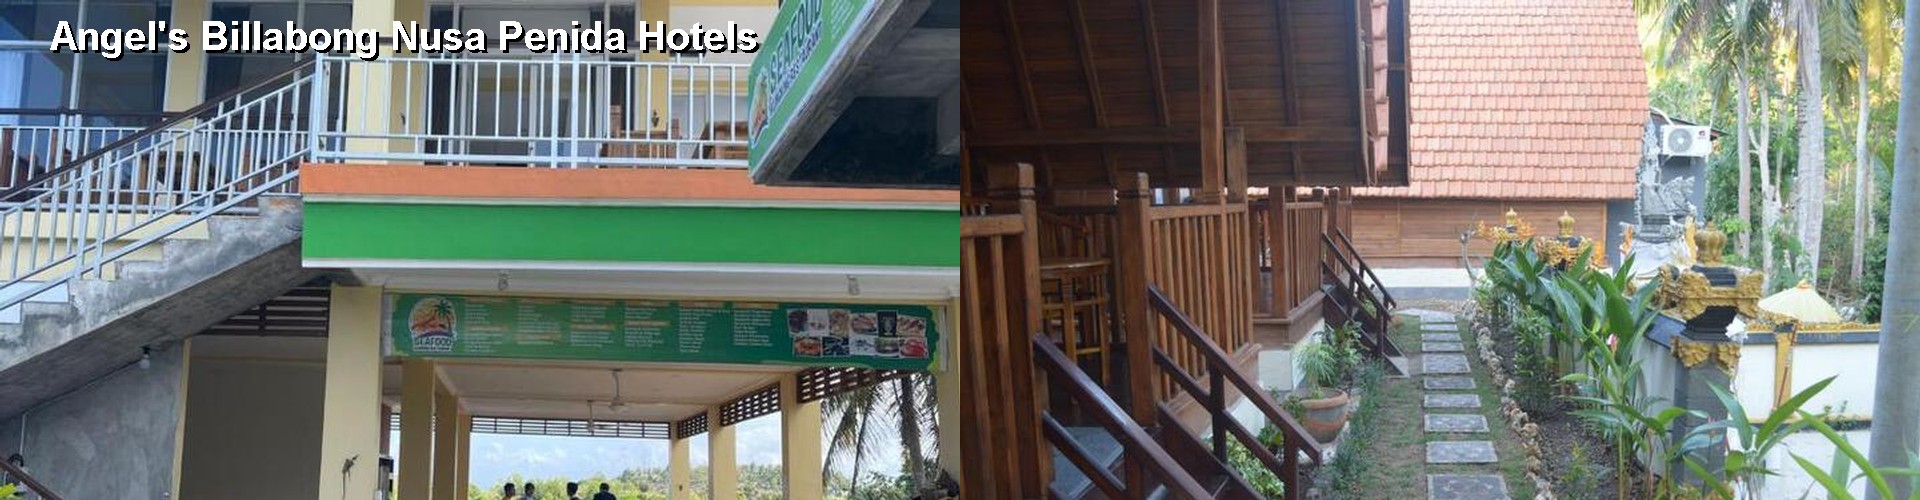 5 Best Hotels near Angel's Billabong Nusa Penida